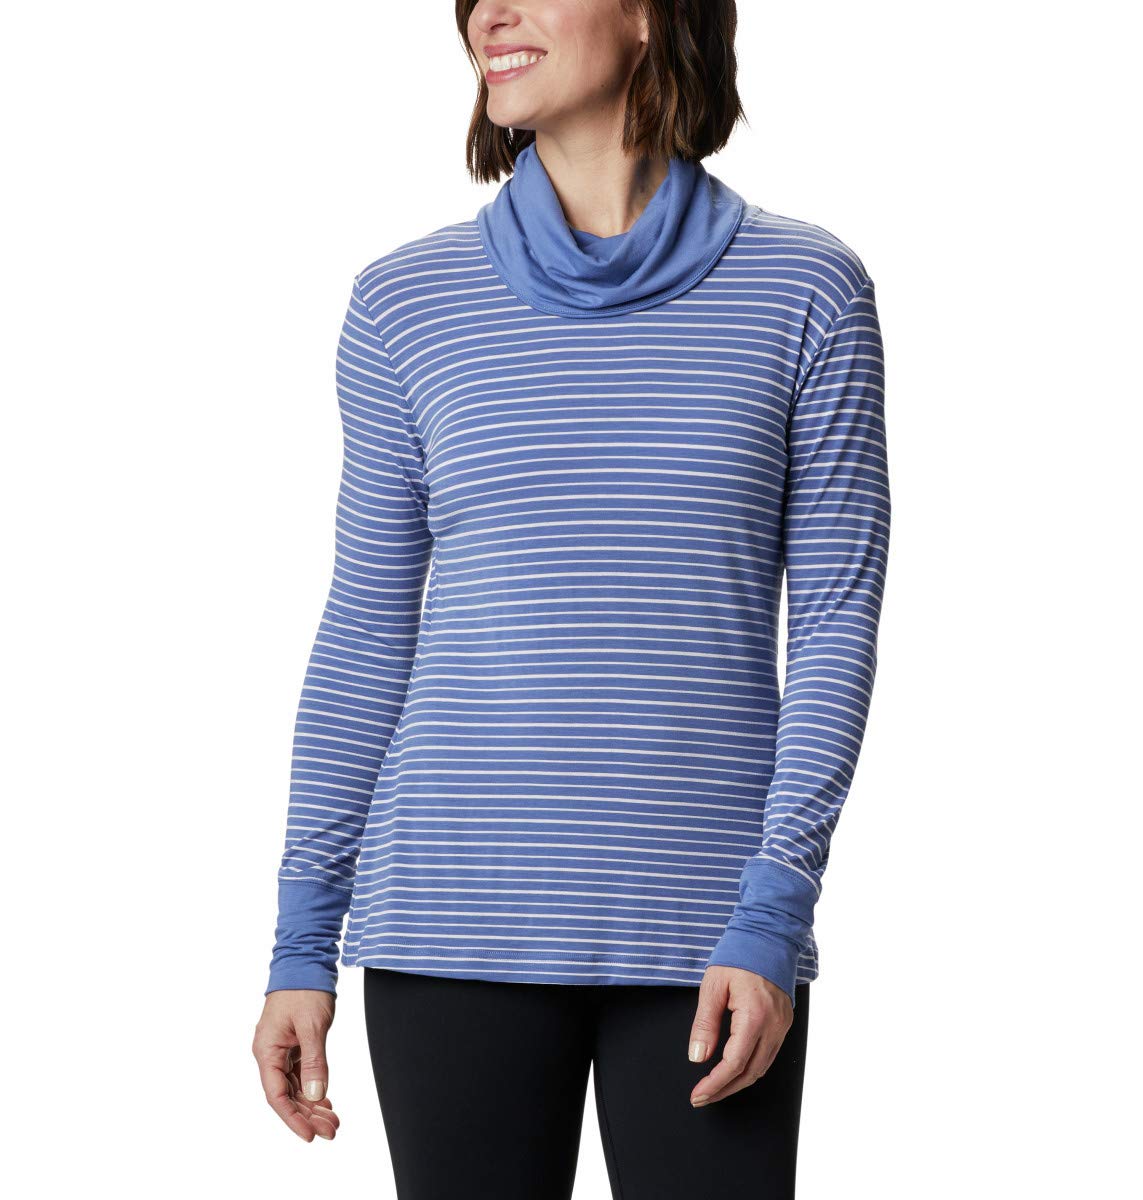 Columbia Women's Essential Elements Long Sleeve Shirt, Velvet Cove Stripe, Large